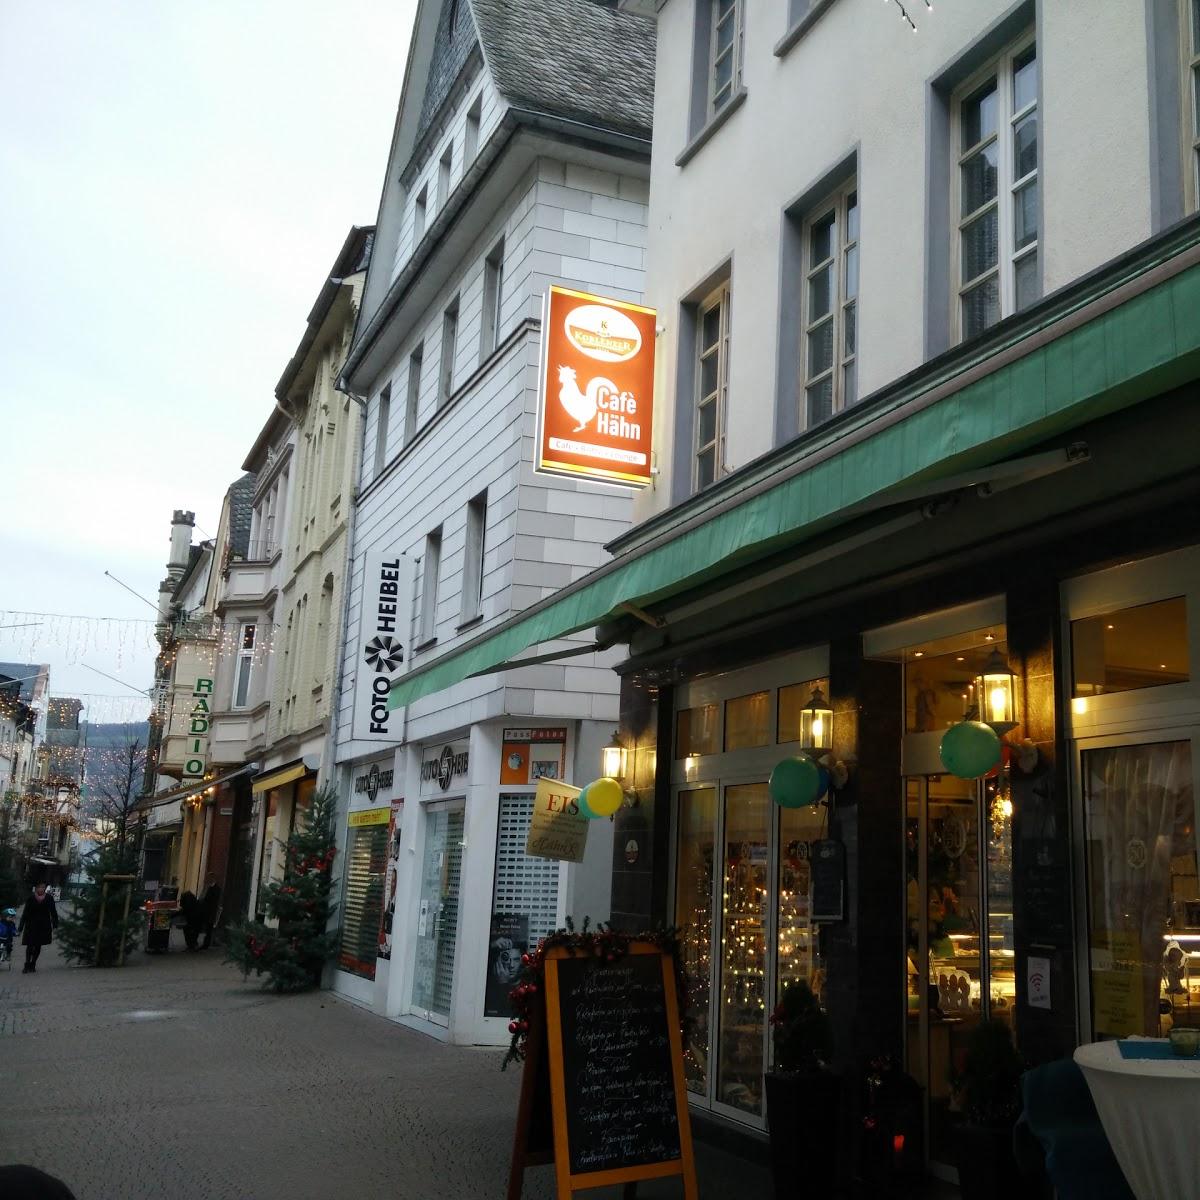 Restaurant "Cafe Hähn" in Boppard